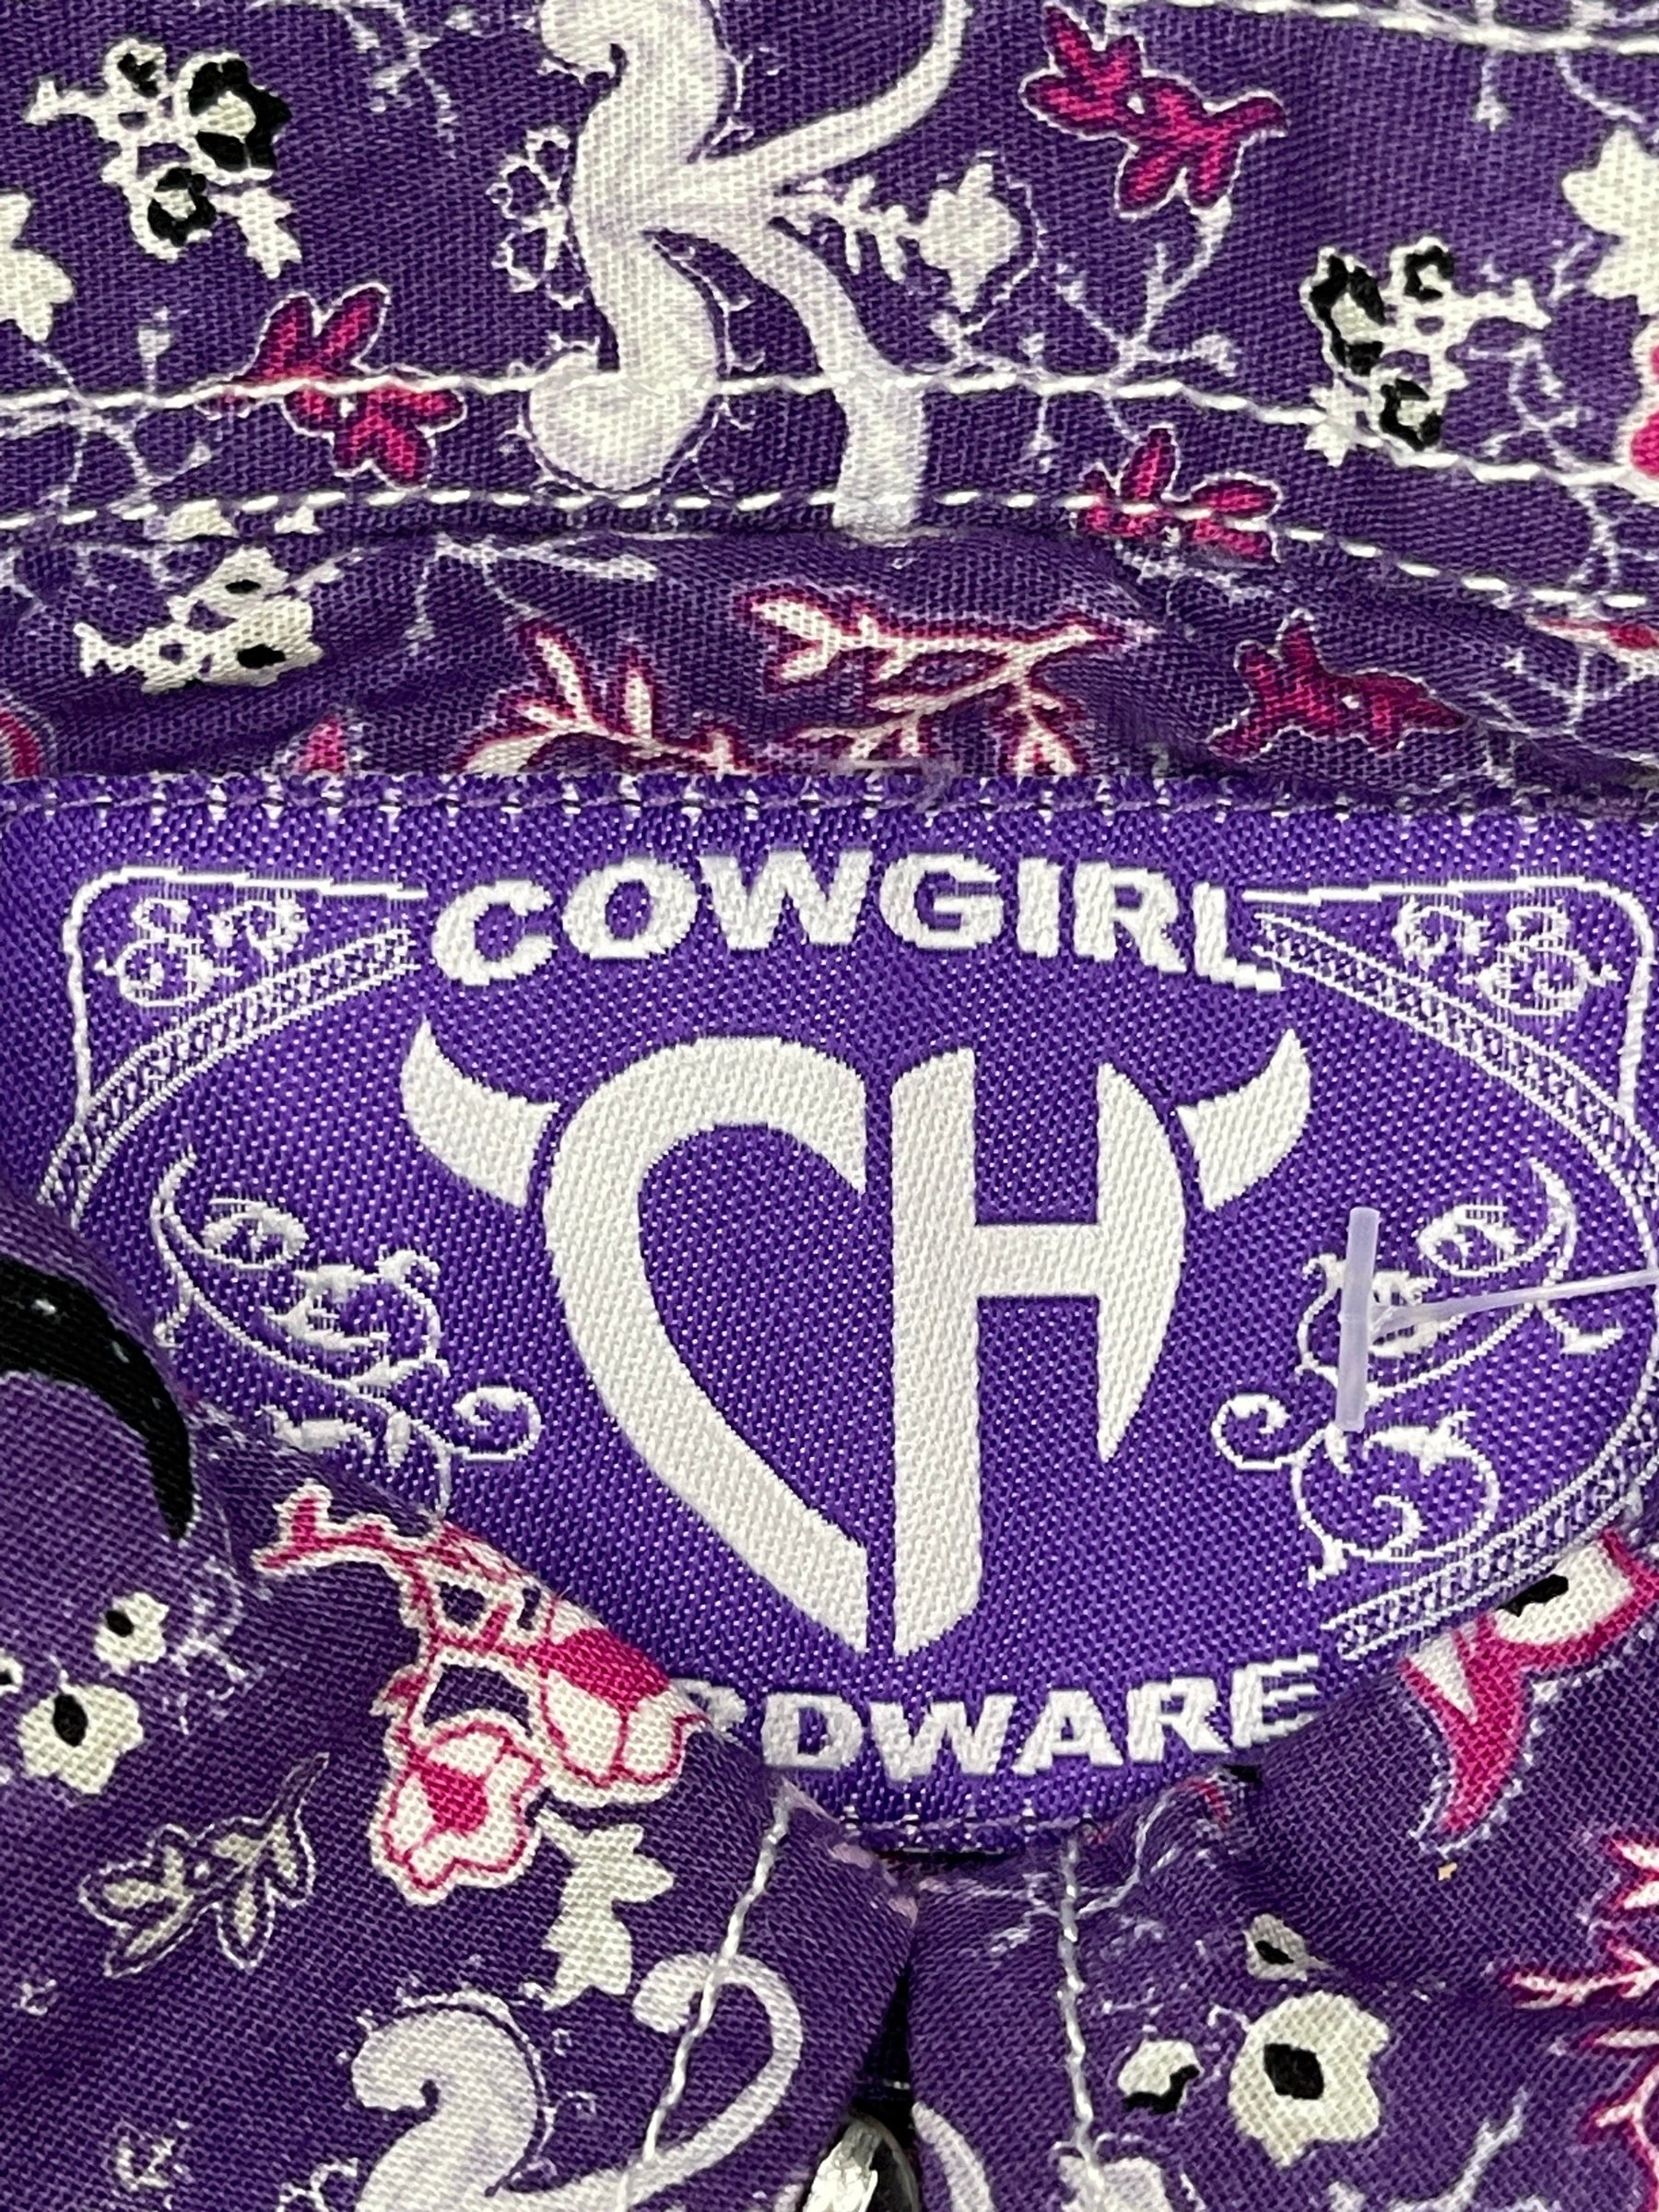 Western Cowgirl Cowboy Purple Plaid Shirt Toddler 4T